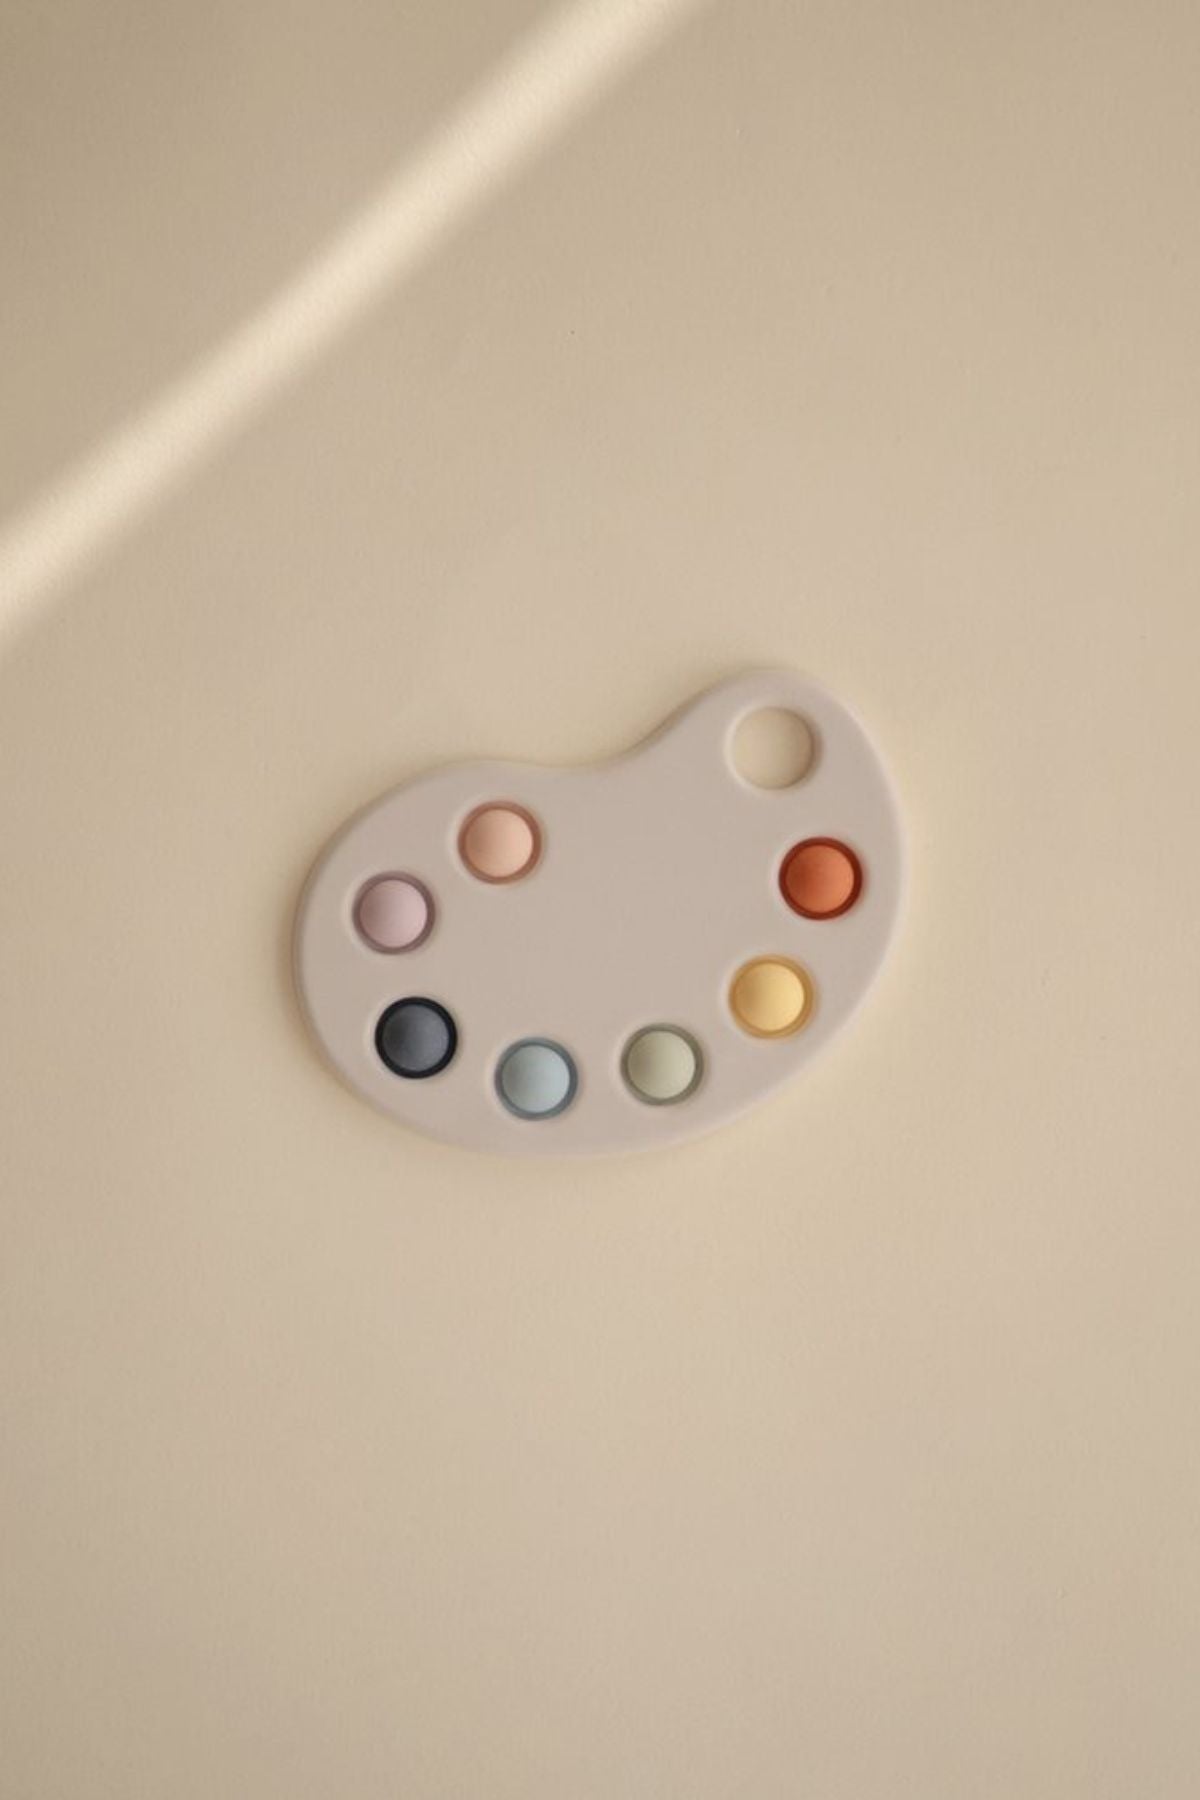 Sensorikspielzeug Farbpalette - Pop it | SYNCSON